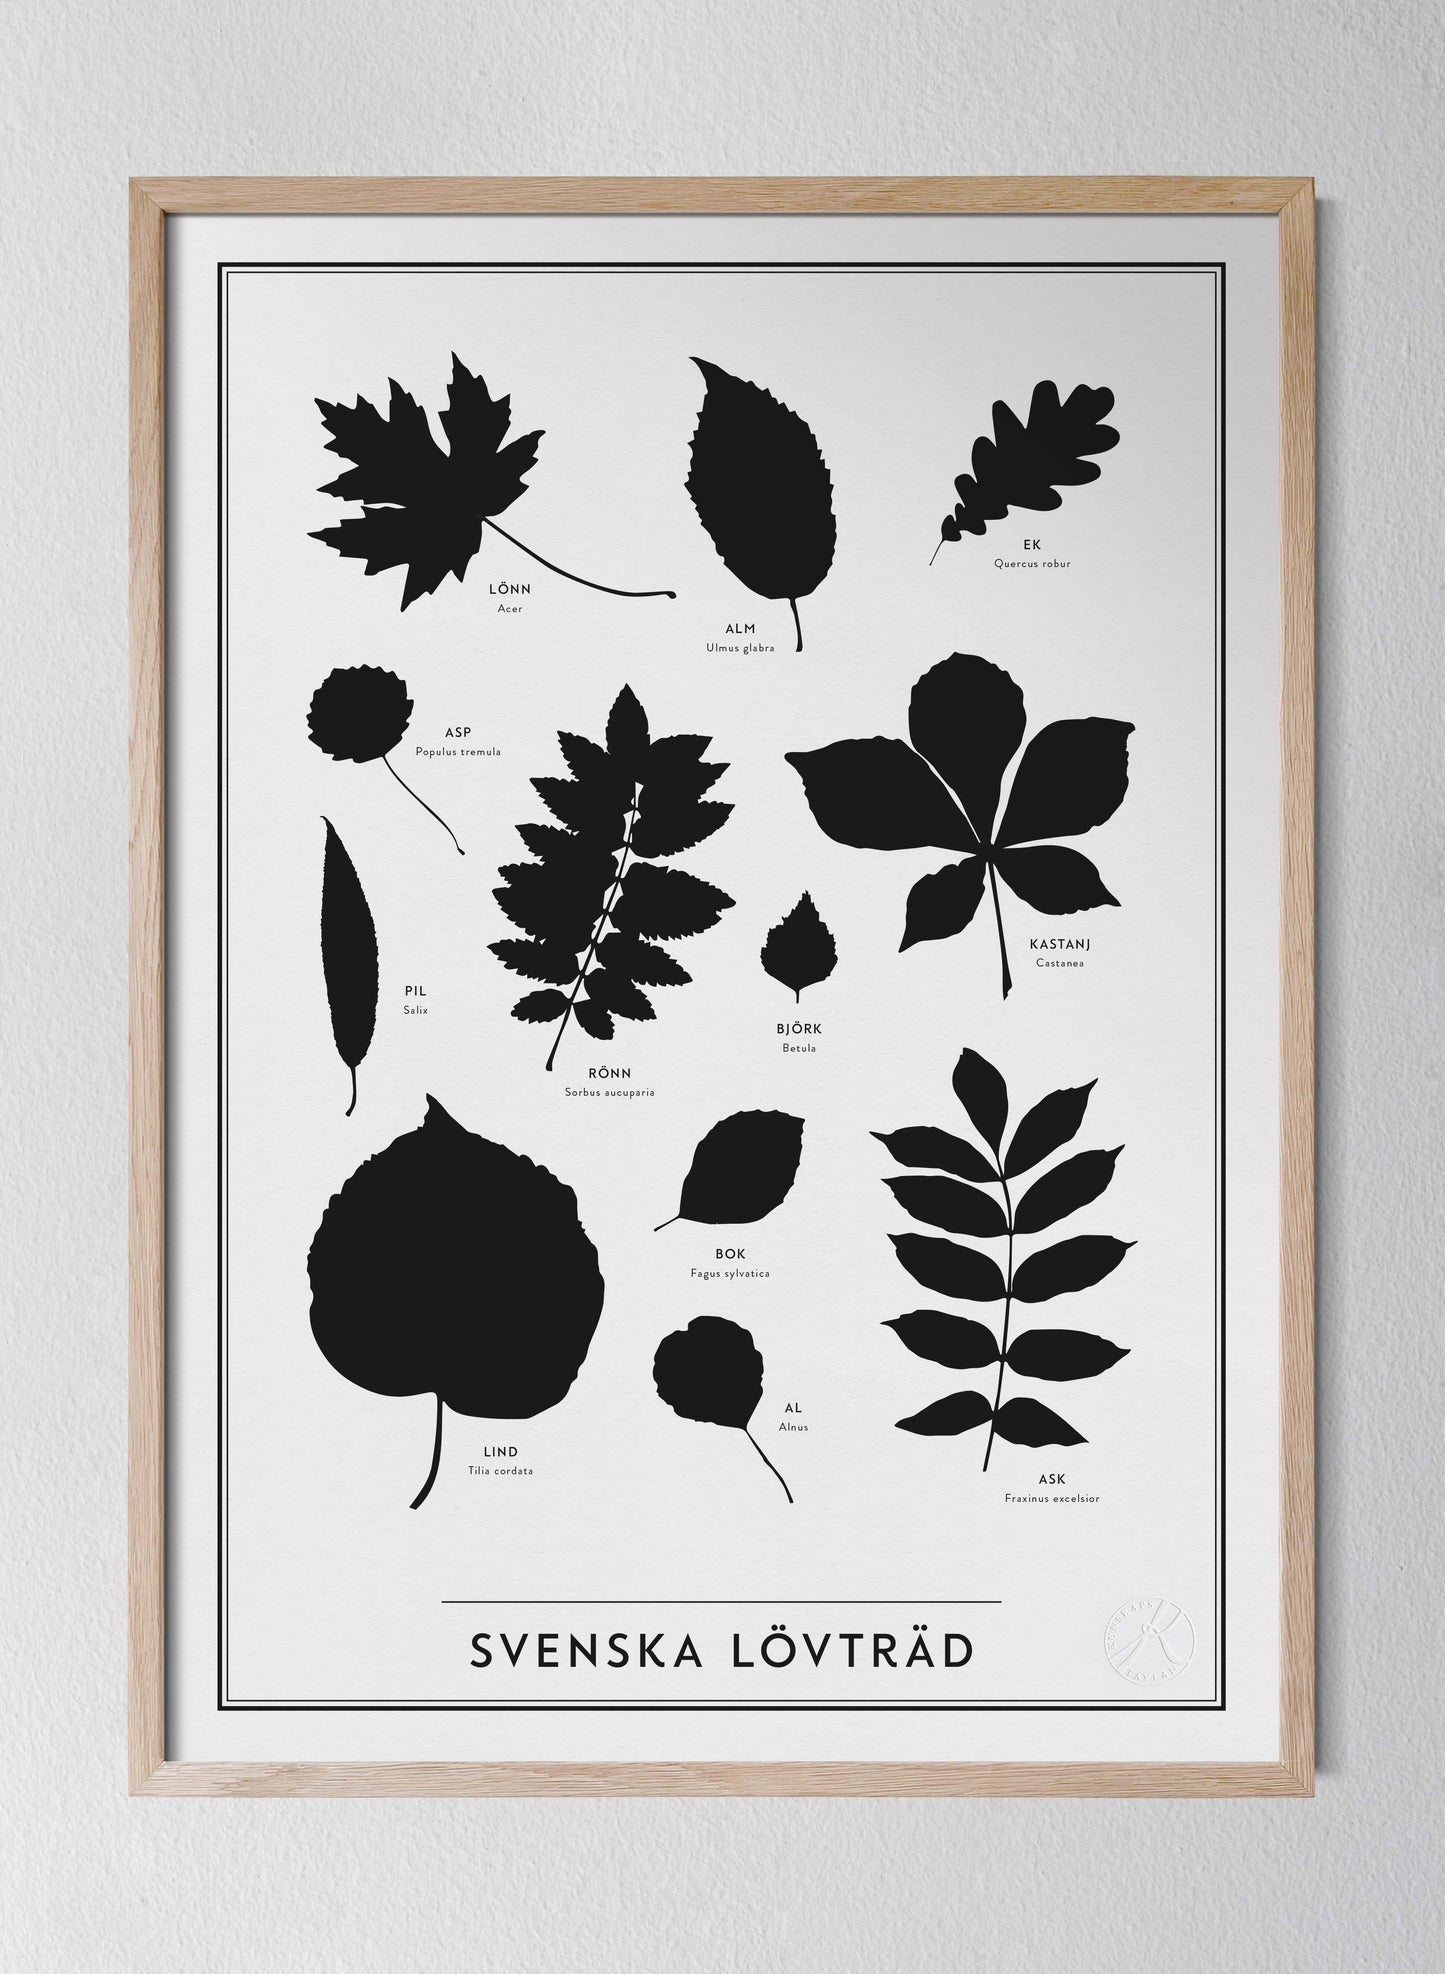 Svenska Lövträd